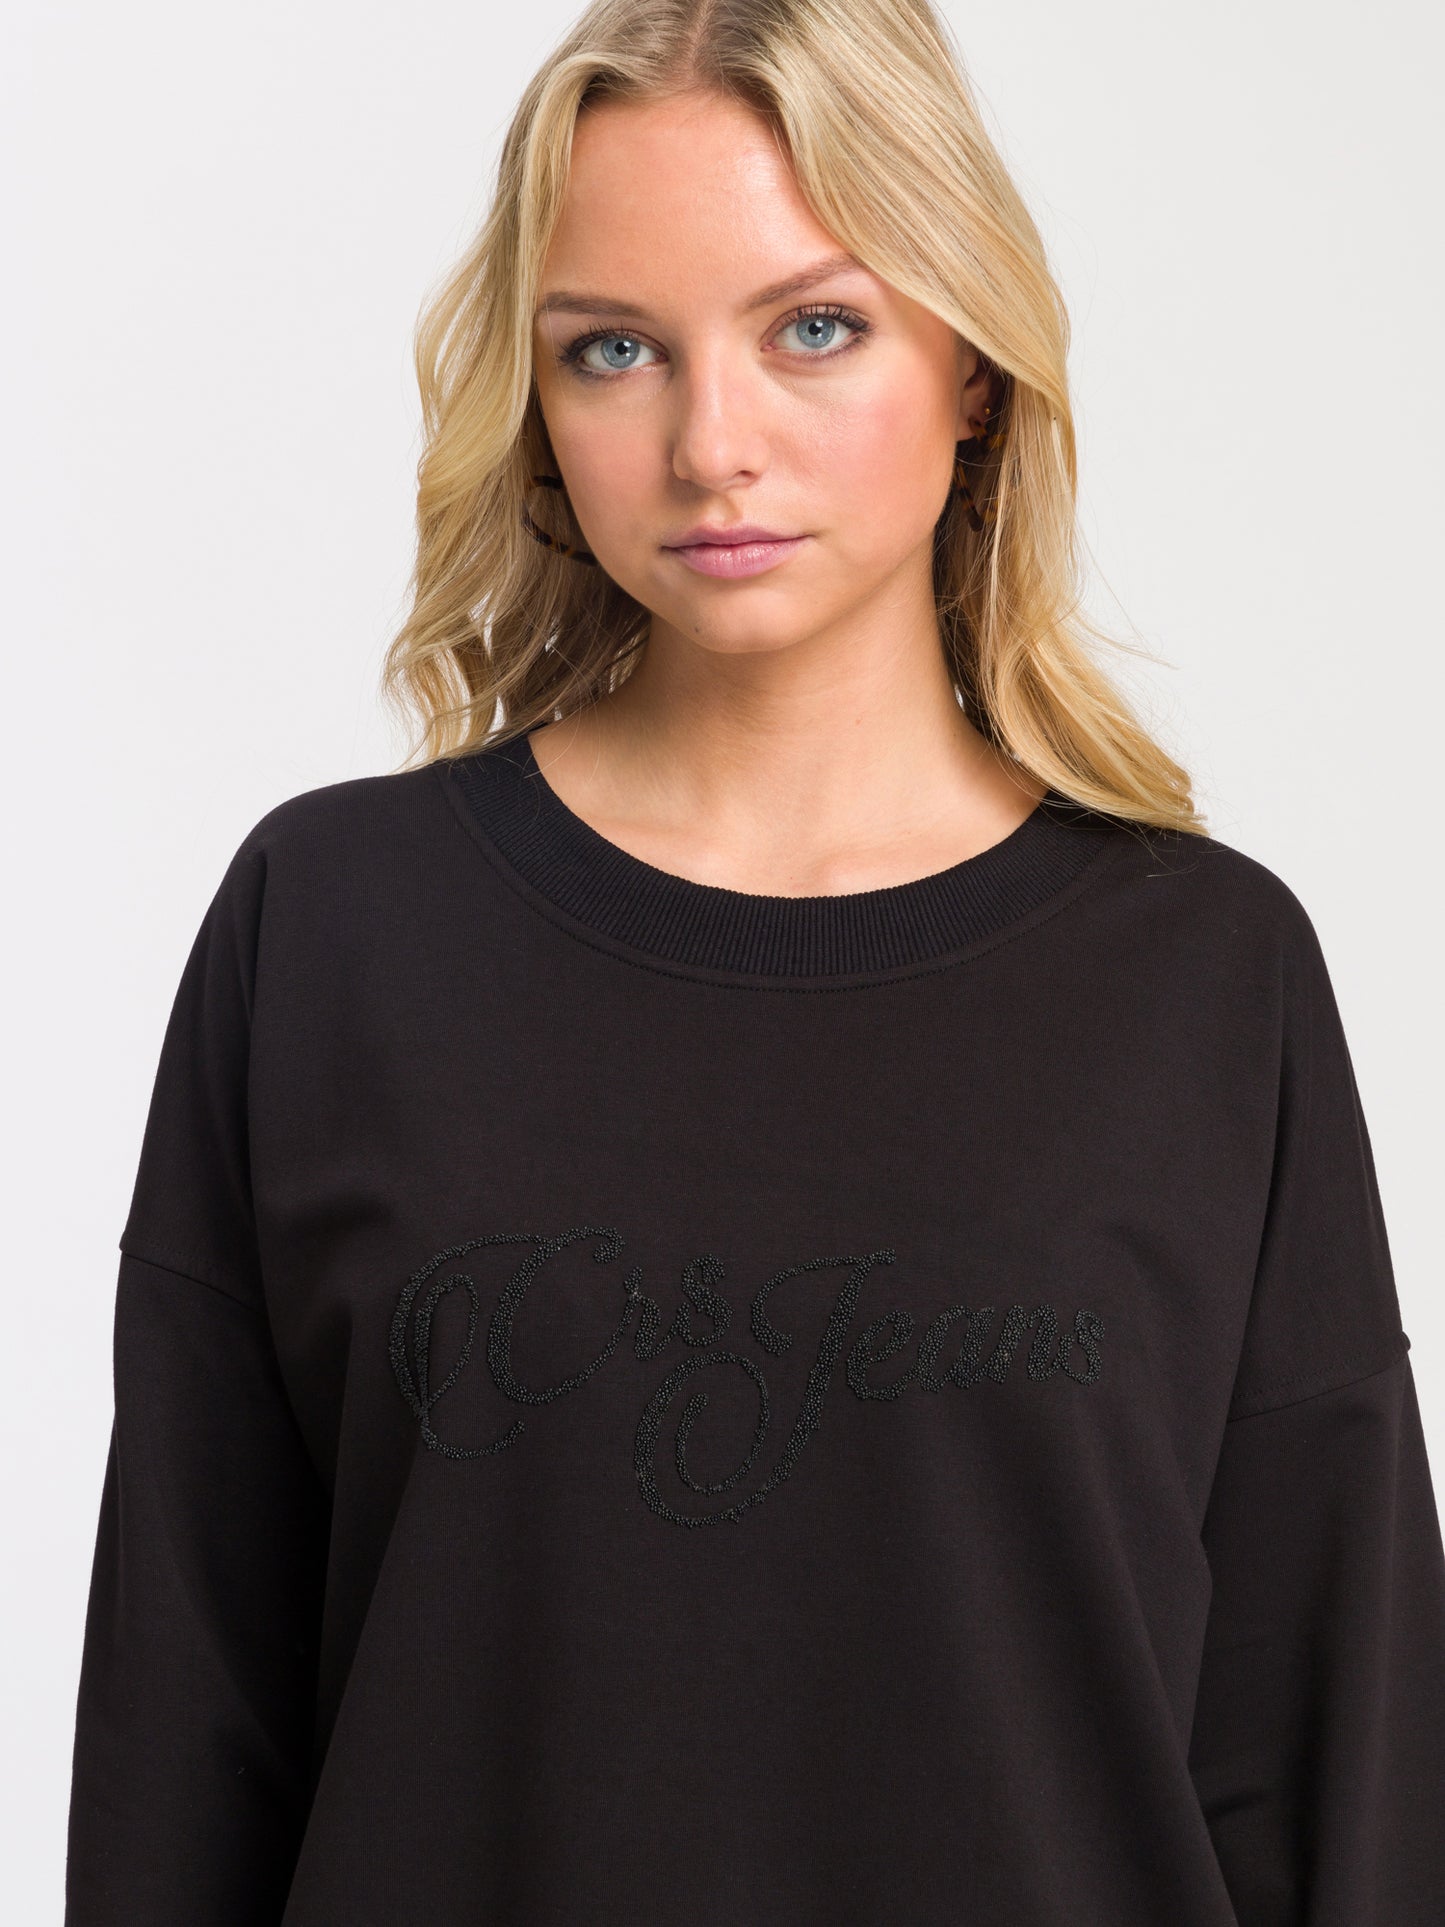 Women's regular sweatshirt with CROSS JEANS logo print black